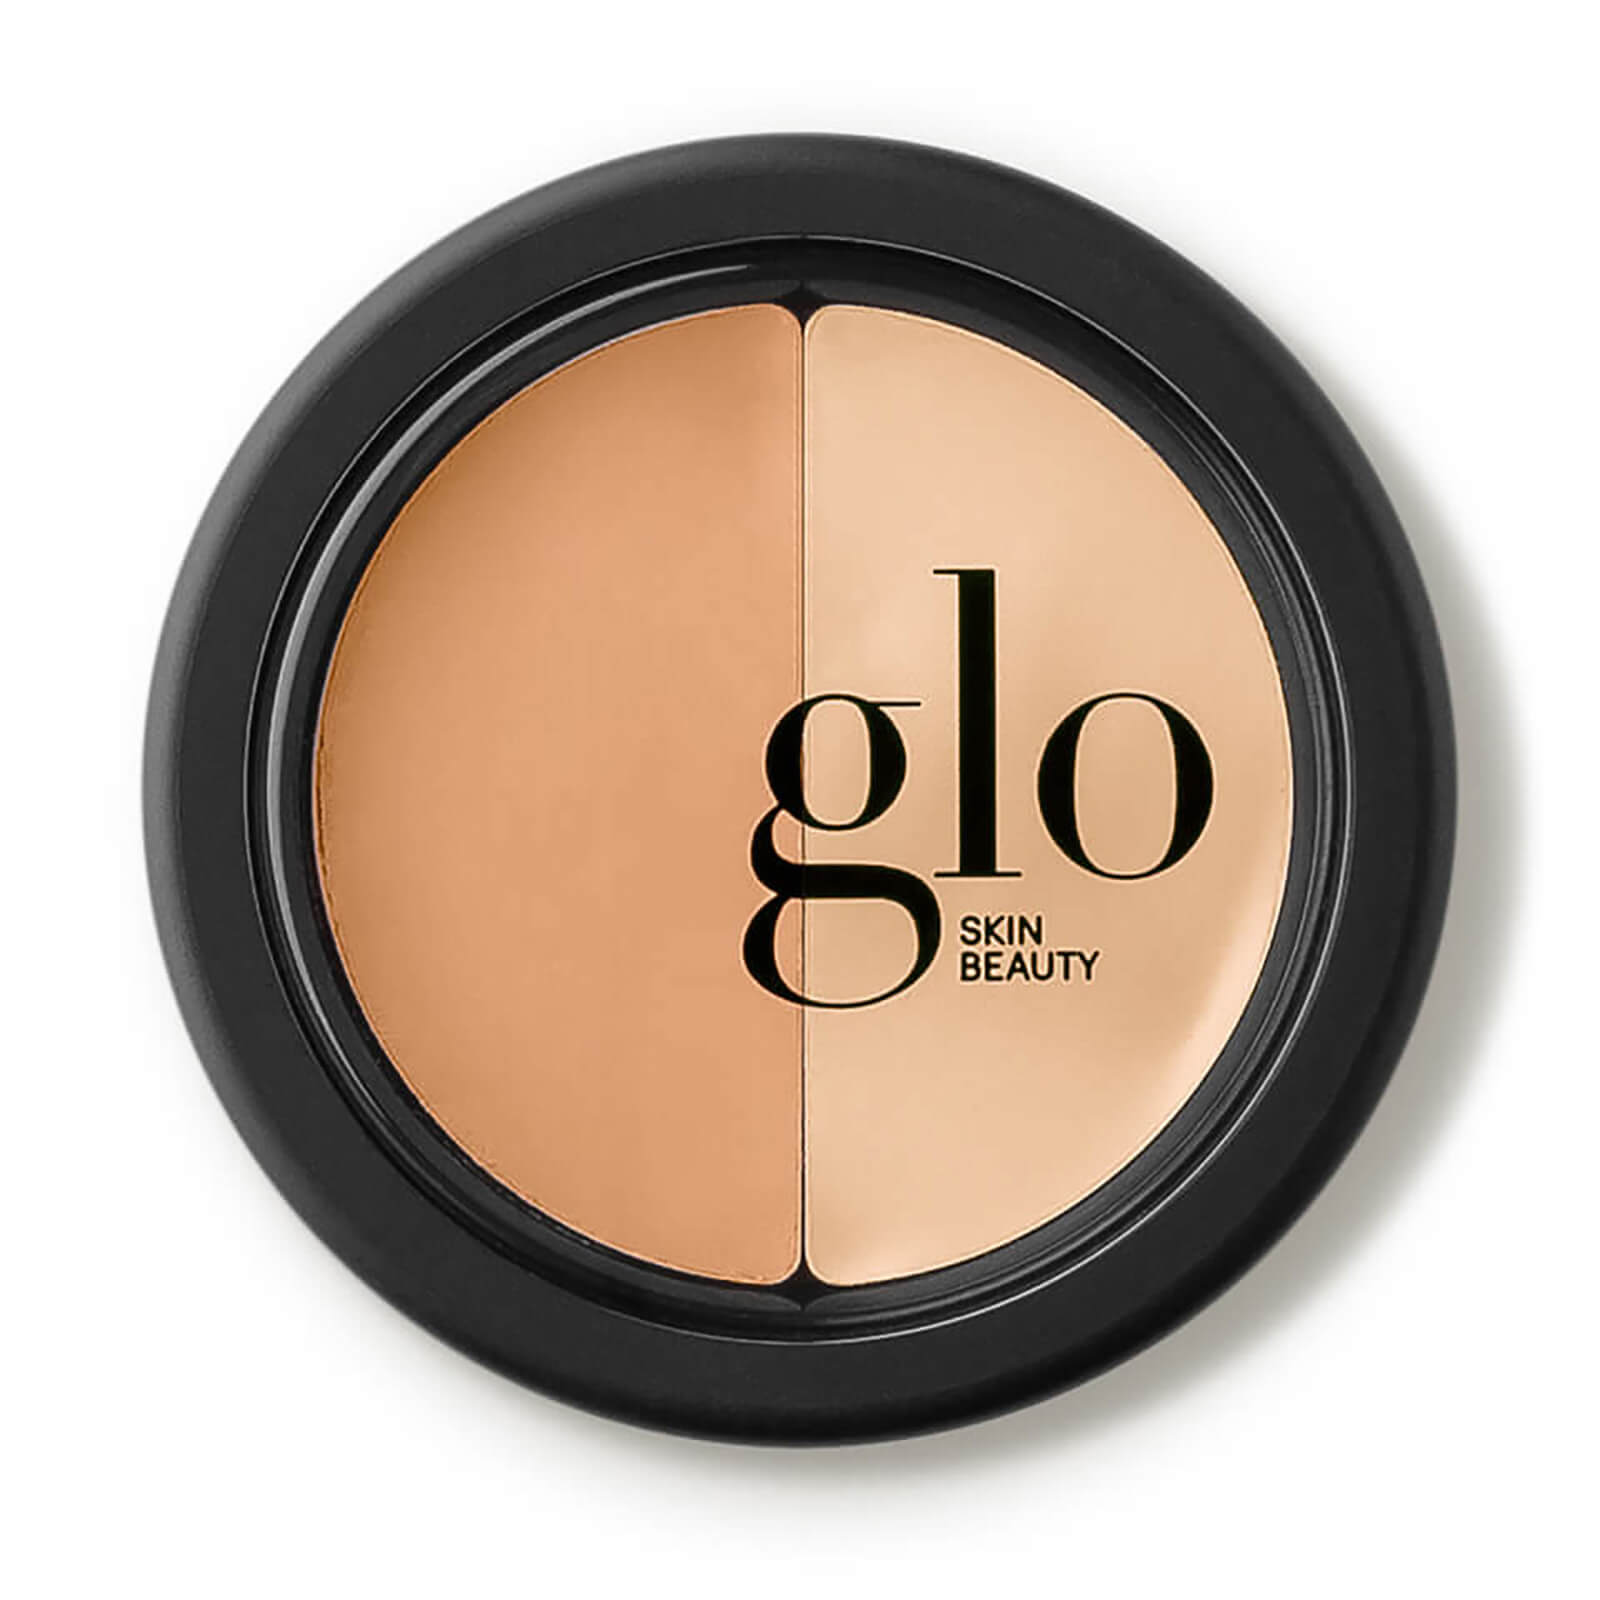 Glo Skin Beauty Under Eye Concealer (0.11 Oz.) In Sand